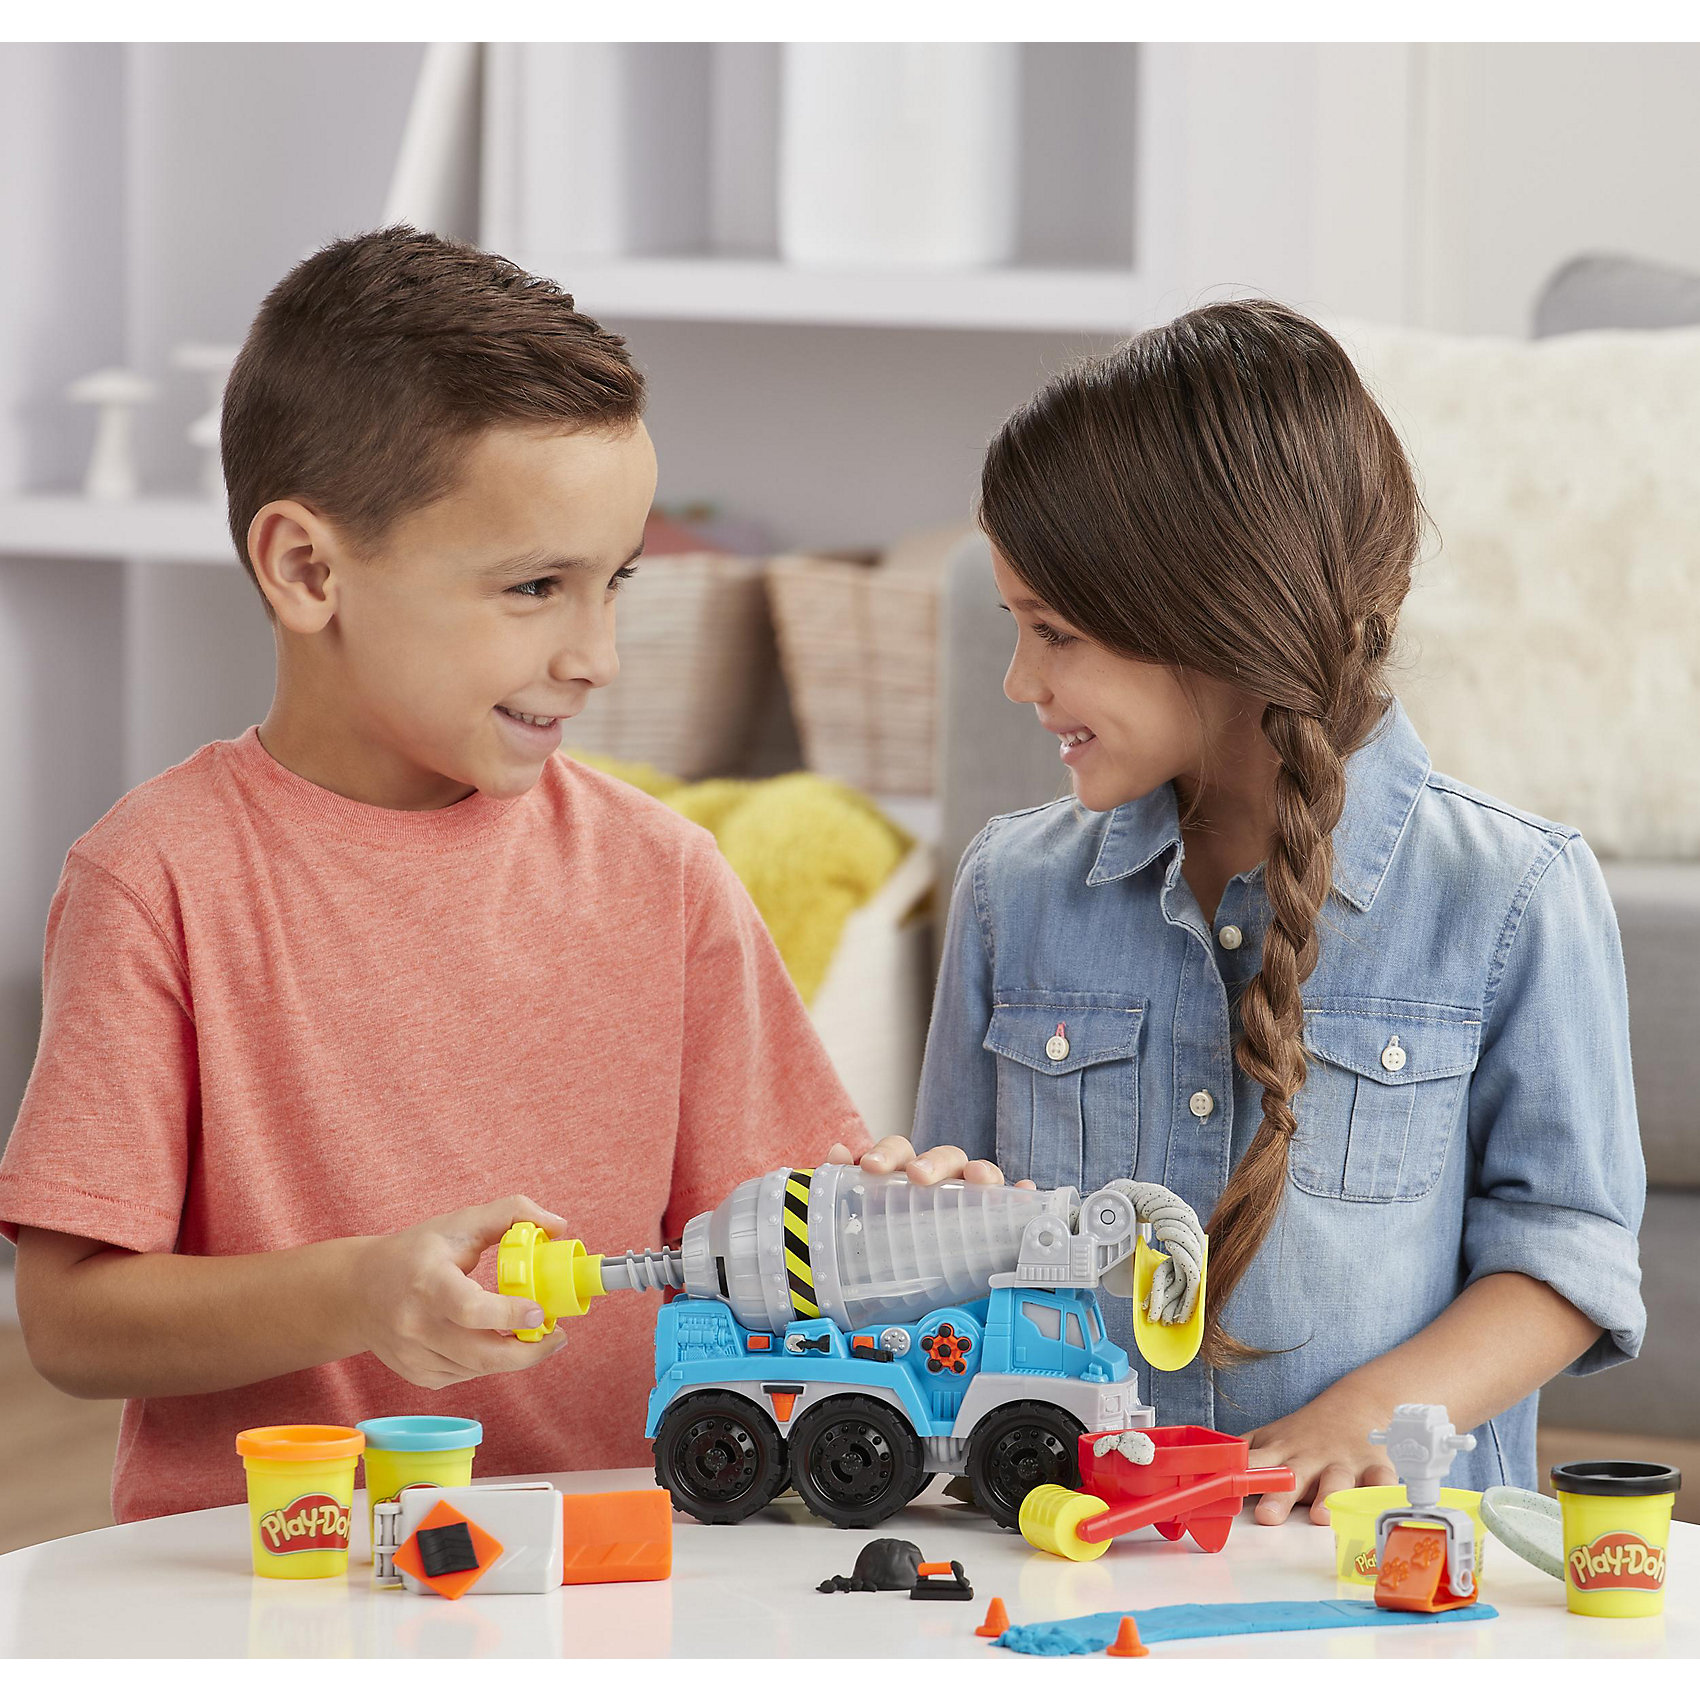 Игровой набор Play-Doh Wheels Бетономешалка Hasbro 13710909